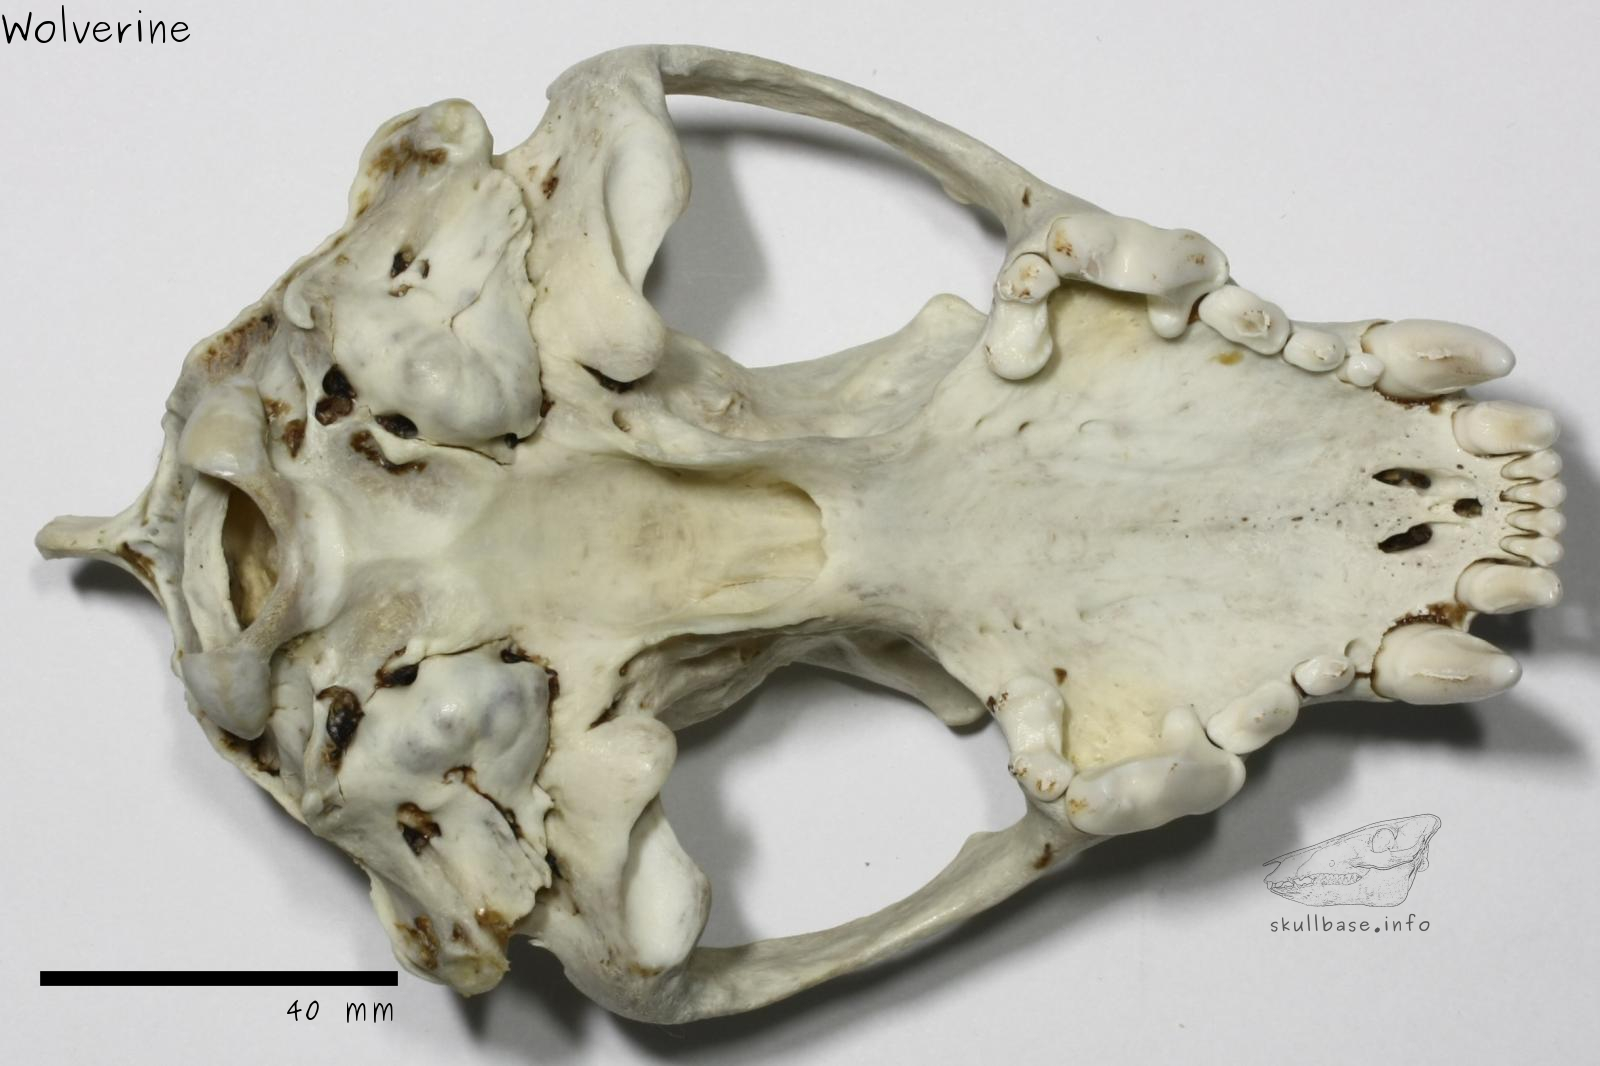 Wolverine (Gulo gulo) skull ventral view